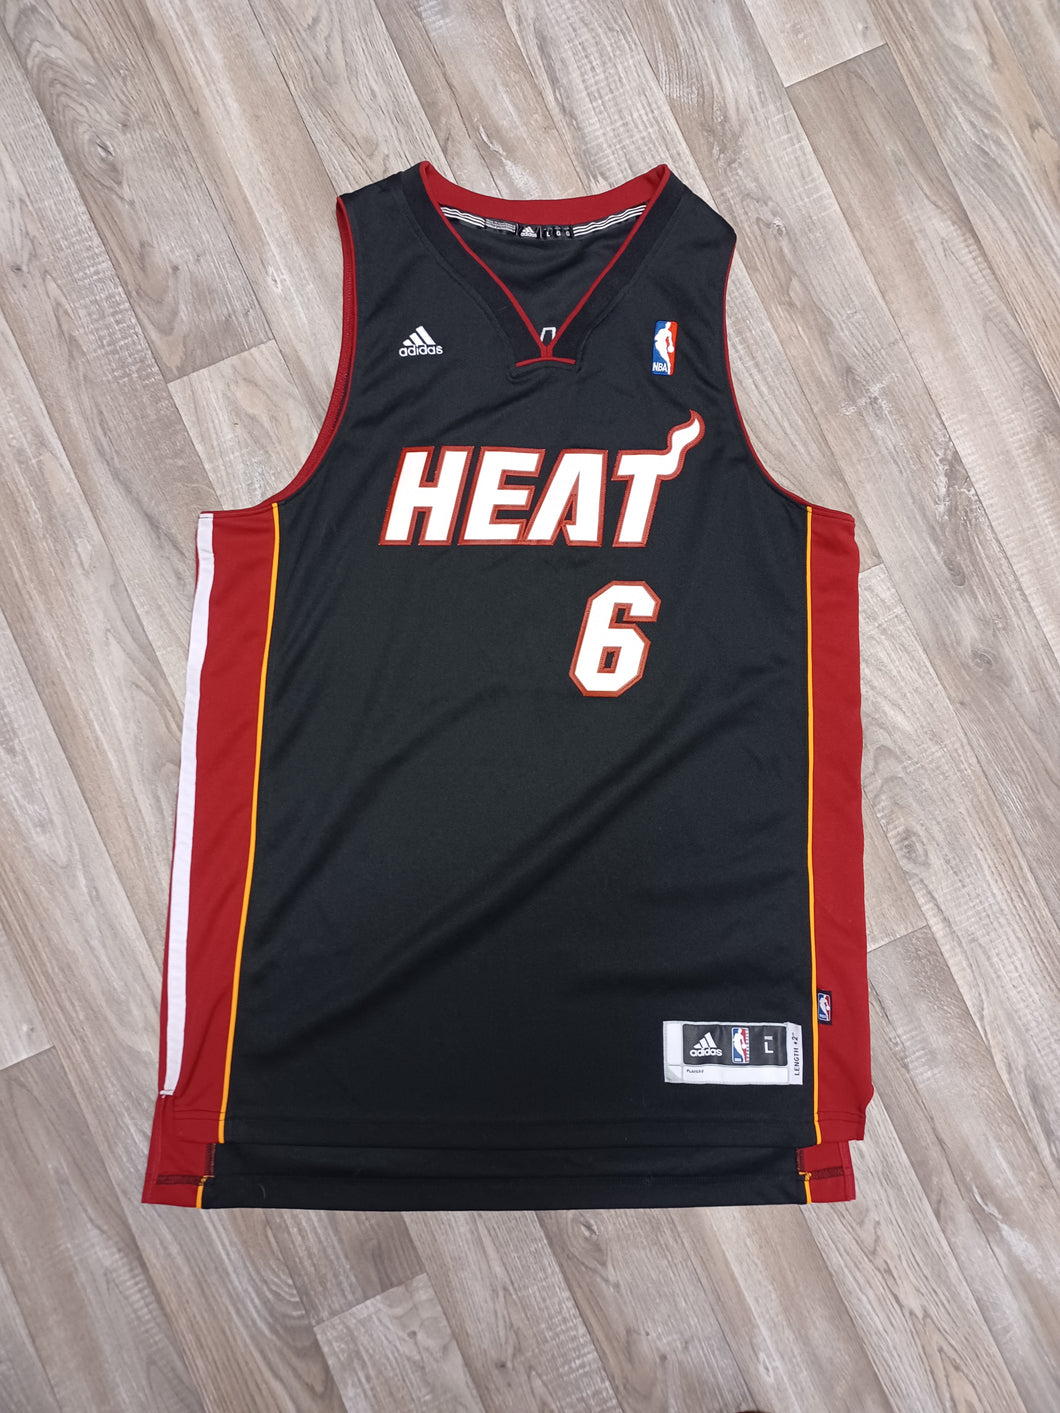 Rare Adidas 2013 NBA All-Star Miami Heat LeBron James Basketball